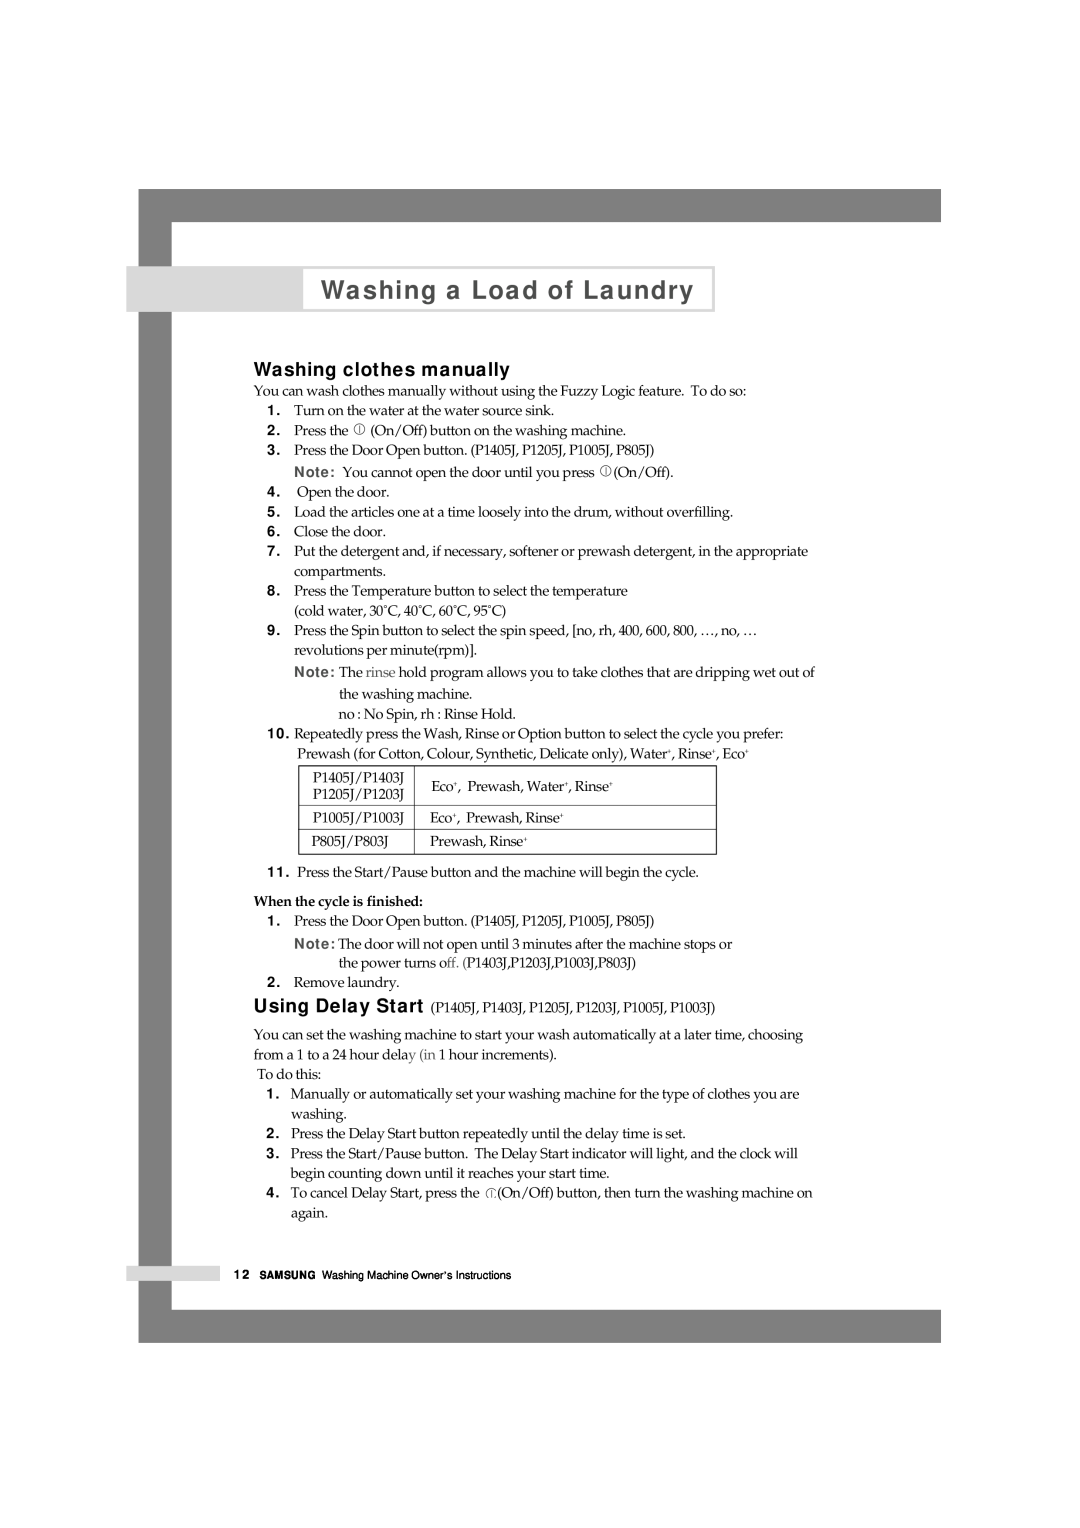 Samsung P1403J, P805J Washing clothes manually, Washing a Load of Laundry, SAMSUNG Washing Machine Owner’s Instructions 